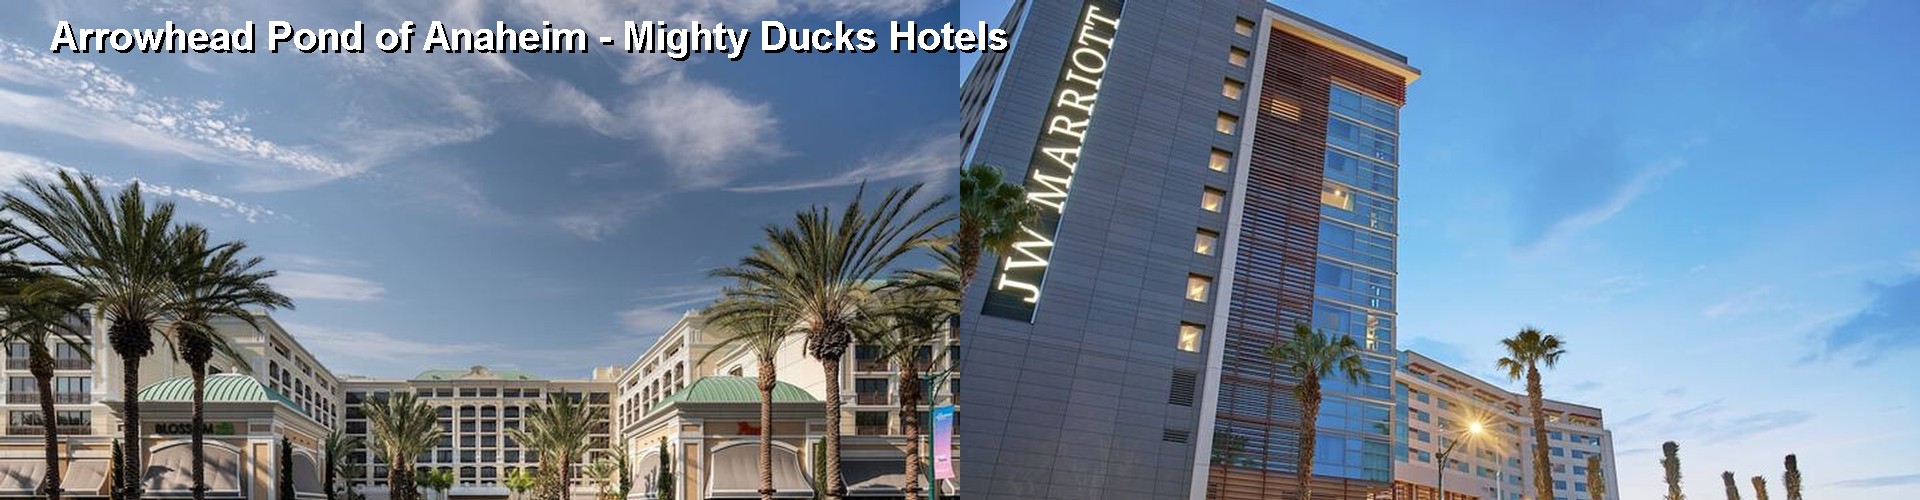 5 Best Hotels near Arrowhead Pond of Anaheim - Mighty Ducks